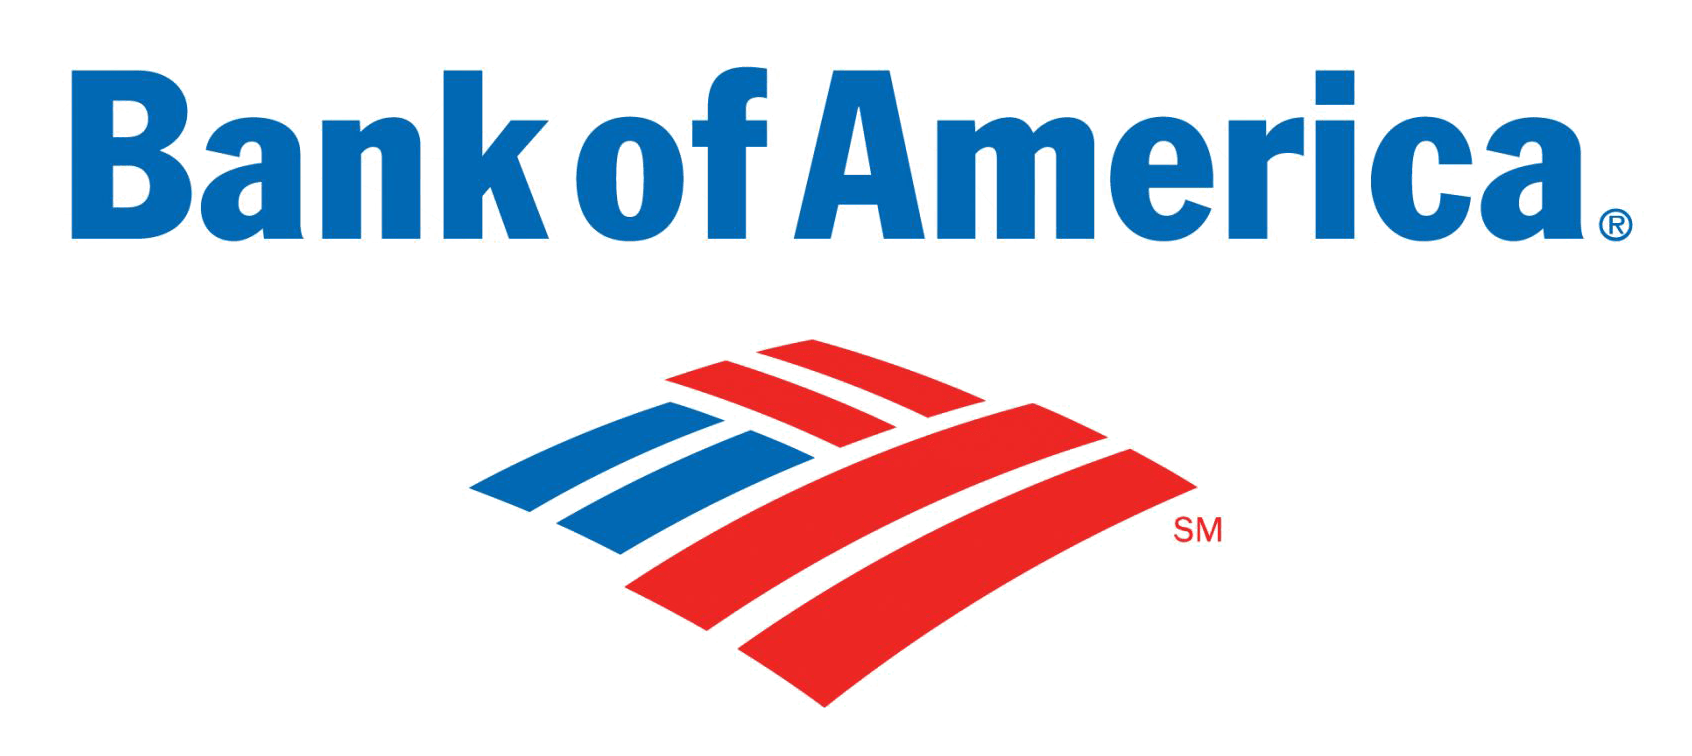 Bank of America Home Loans Logo - Bank of America Home Loans